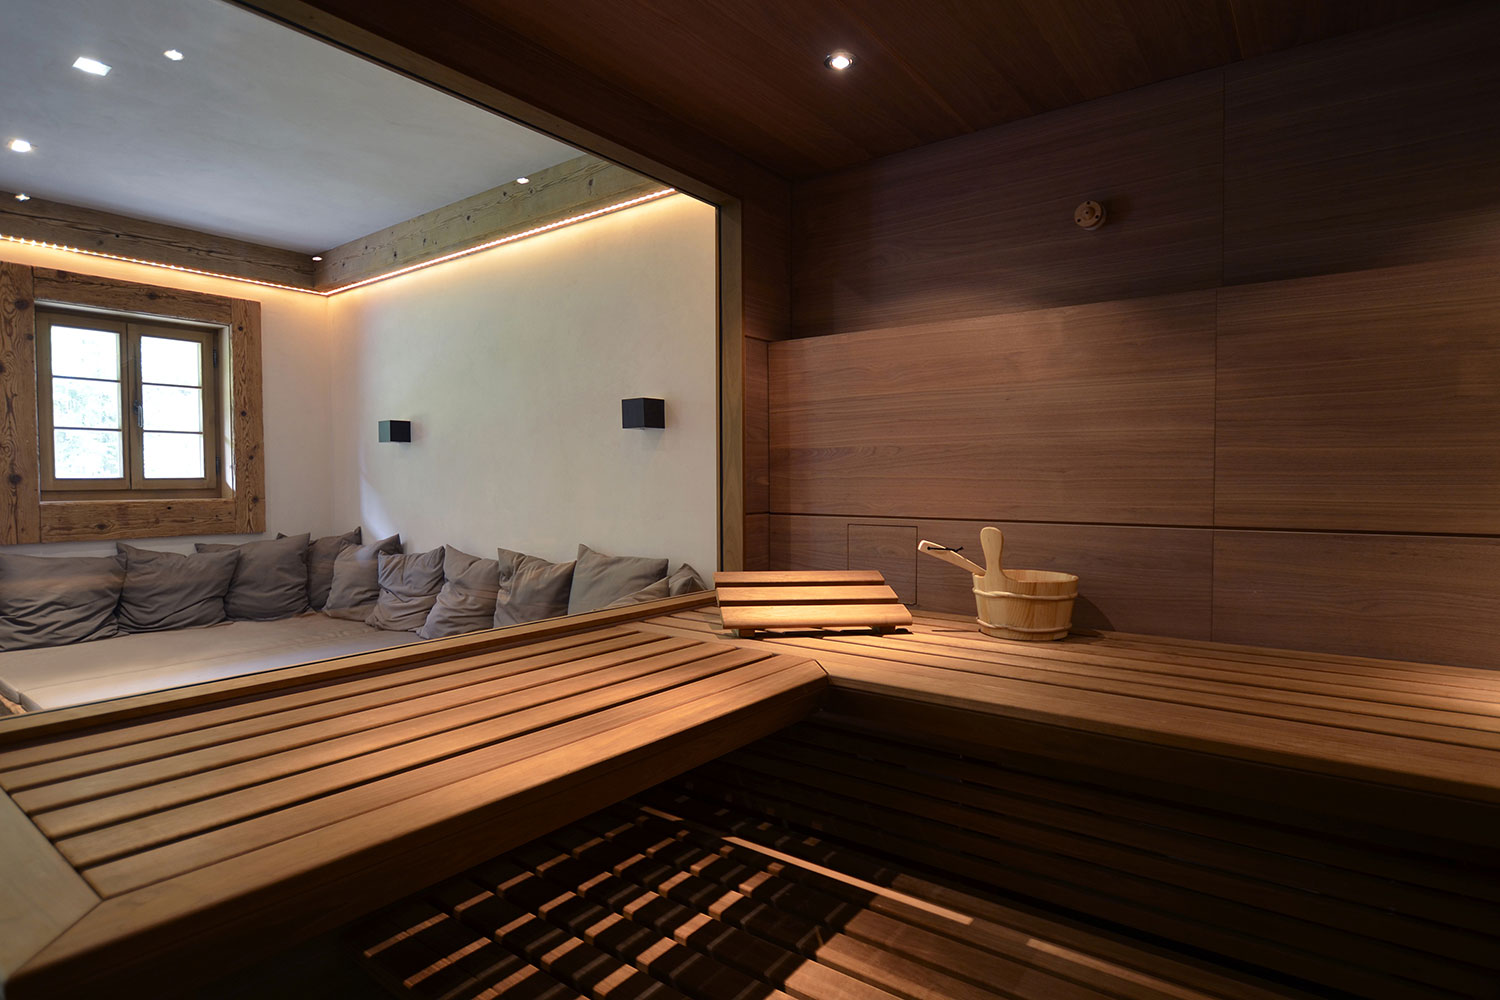 RUKU Sauna integrierte Infrarotkabine Thermium